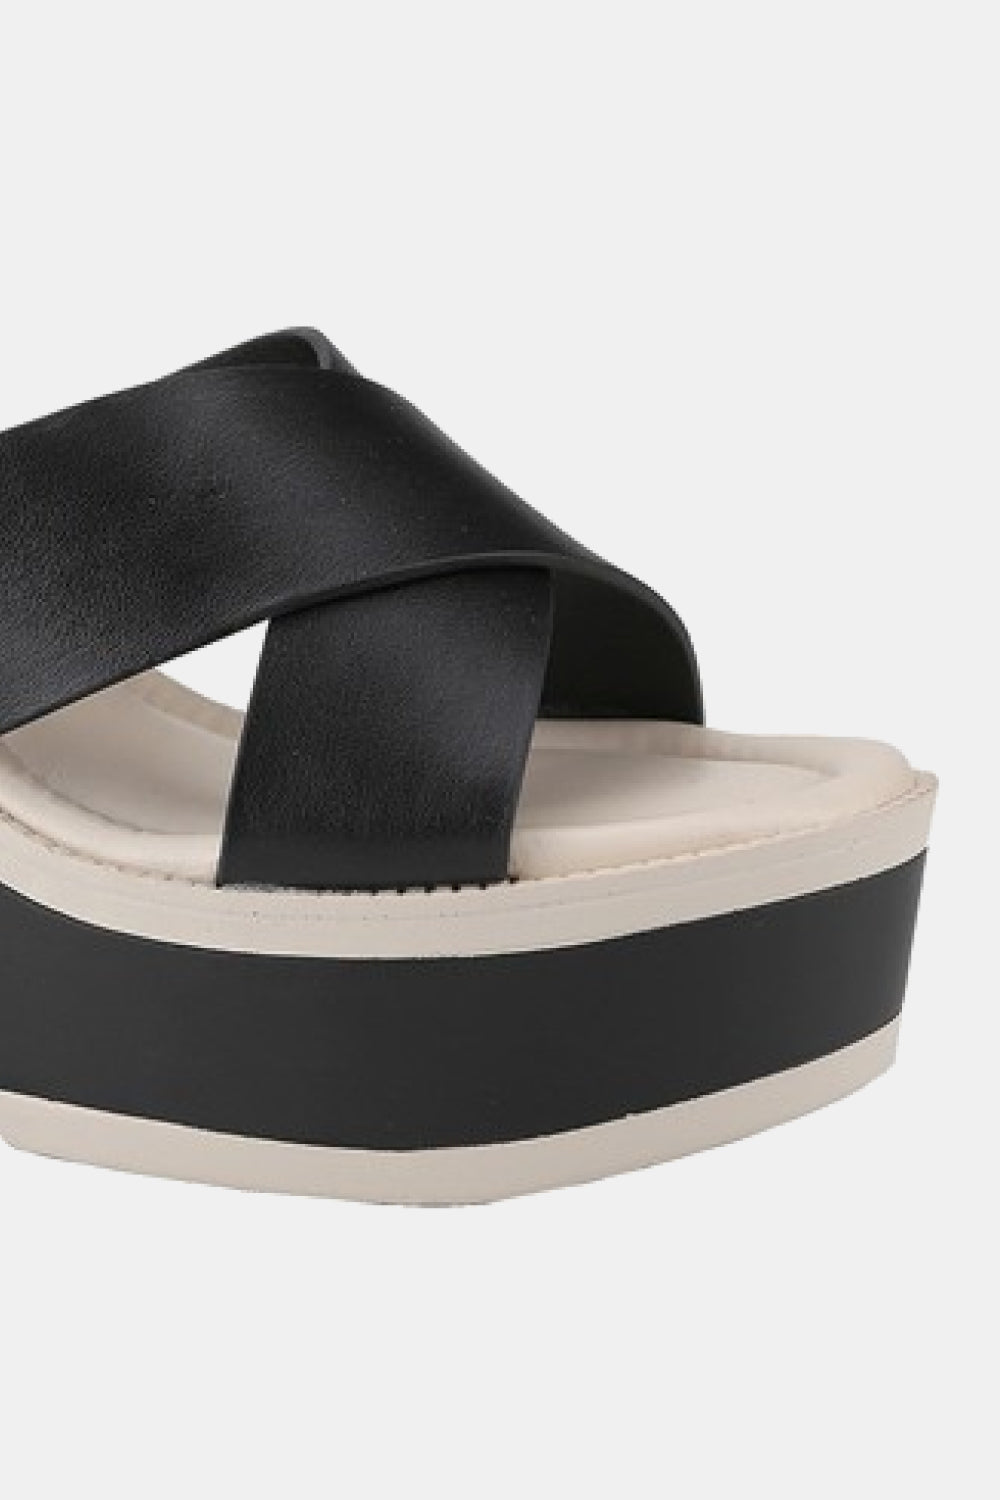 Weeboo Cherish The Moments Contrast Platform Sandals in Black - FunkyPeacockStore (Store description)